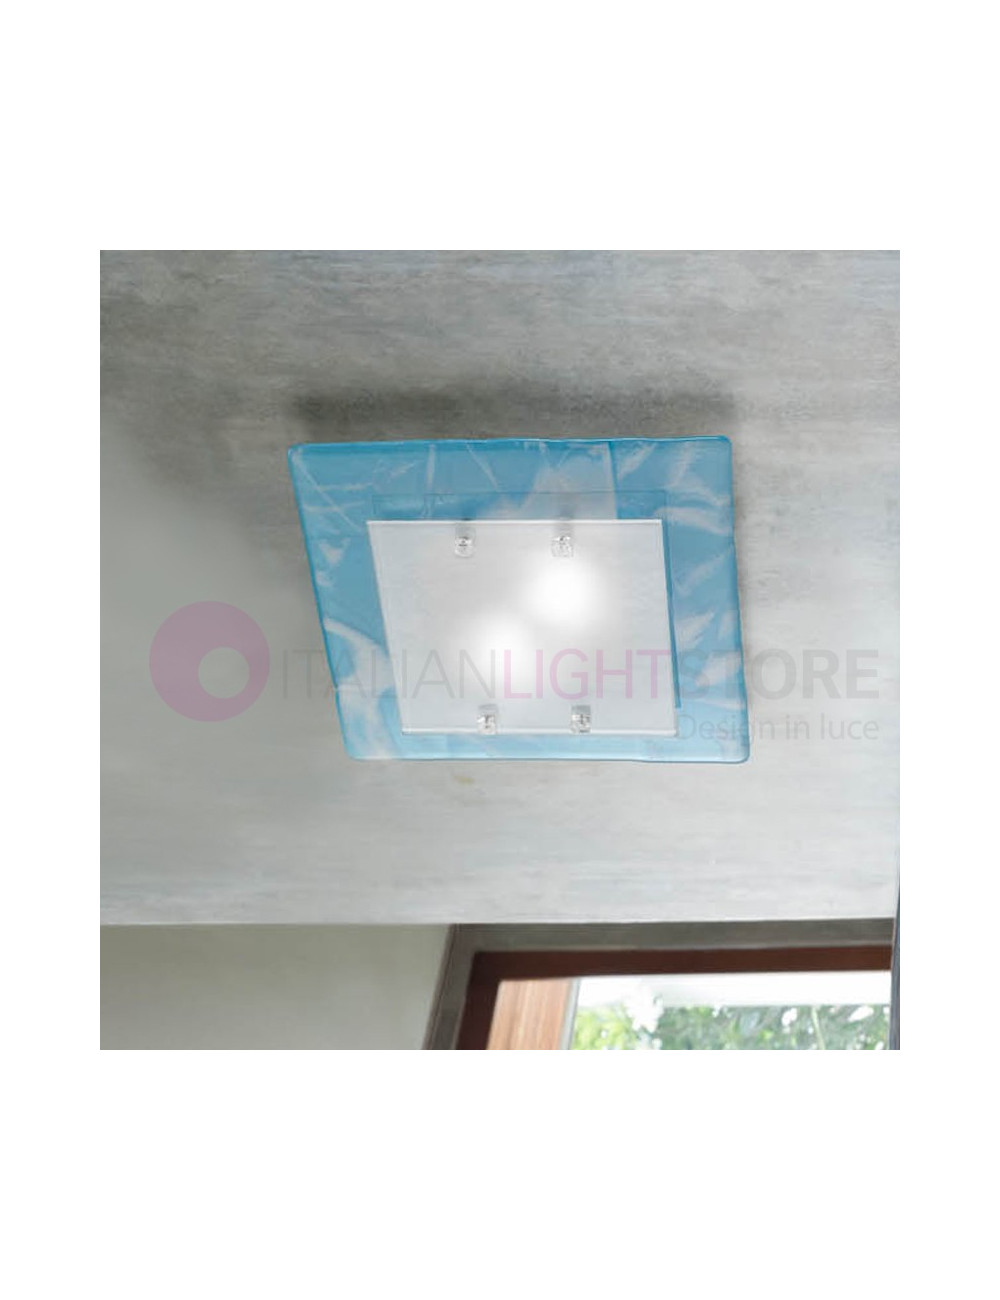 PHOENIX FAMILAMP 335/PL35 Ceiling light Modern Murano Glass Colorful L. 35 Cm